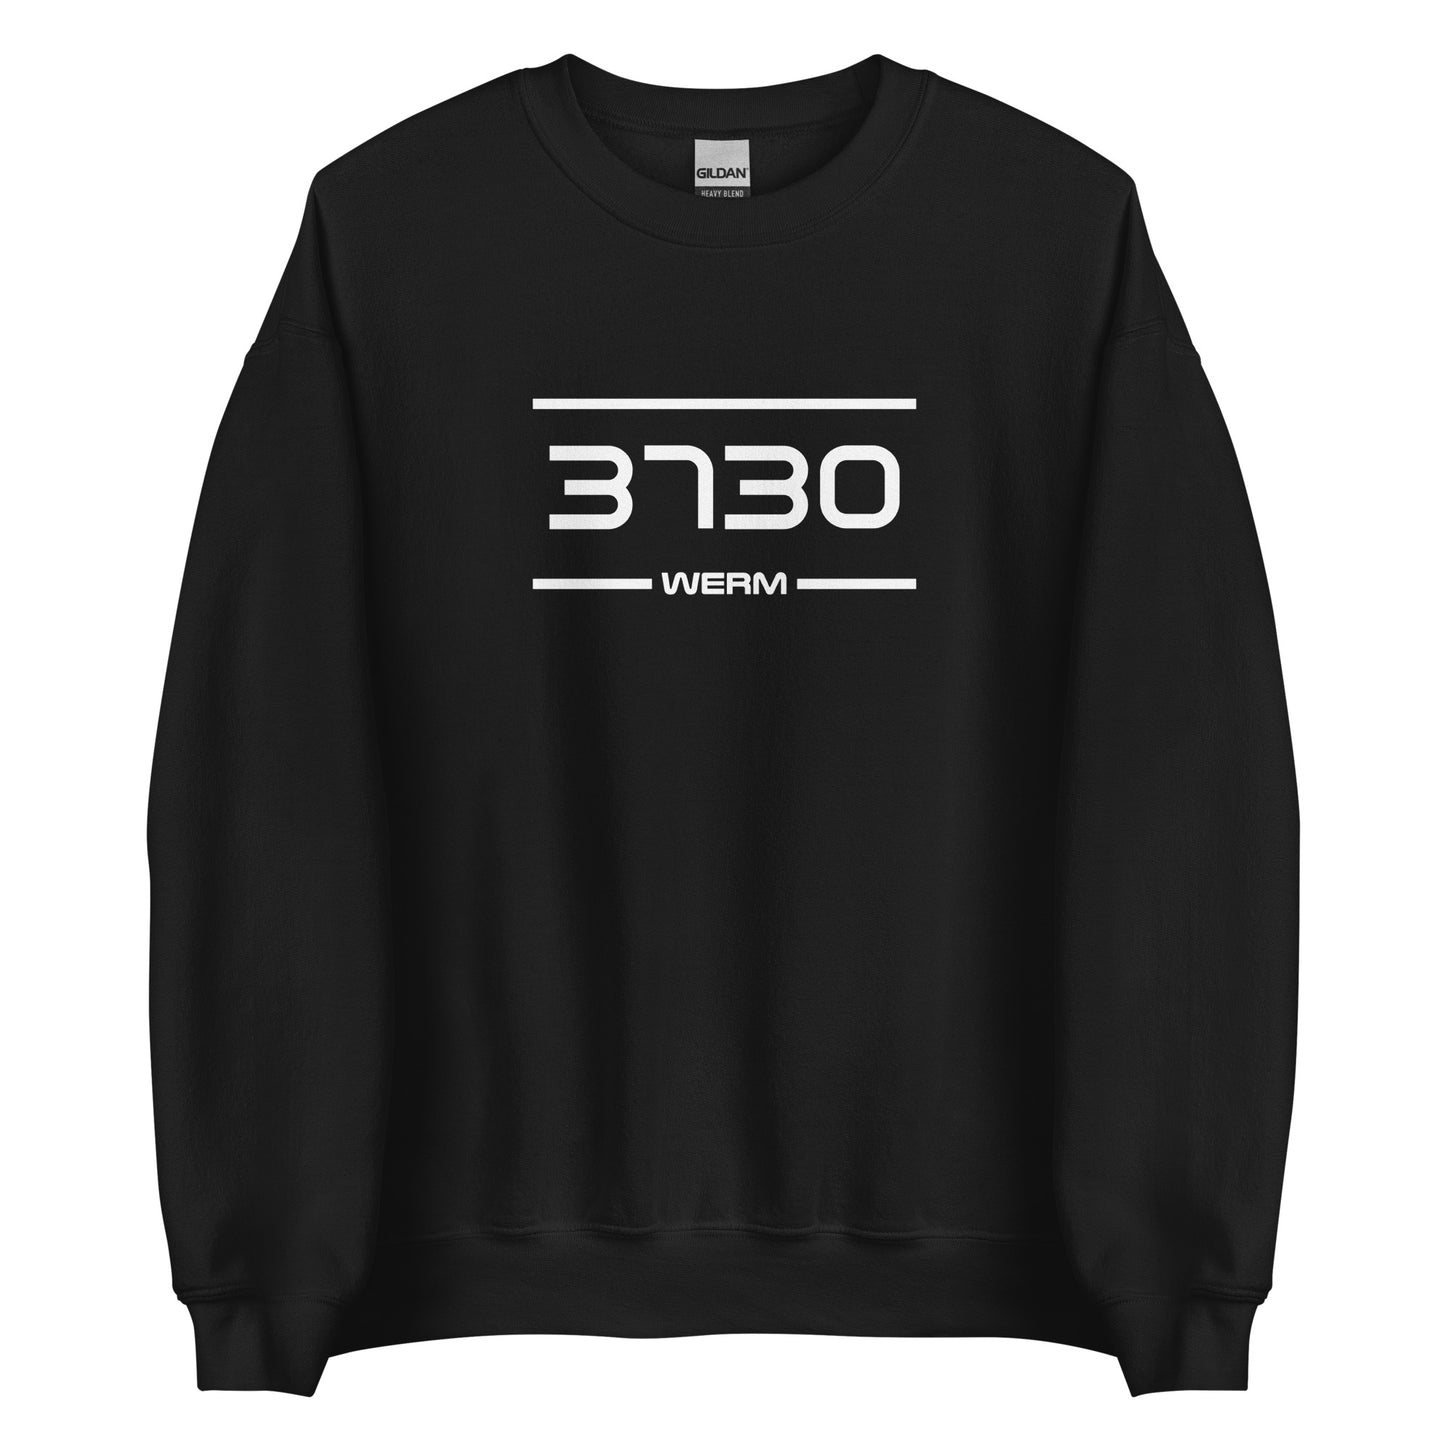 Sweater - 3730 - Werm (M/V)